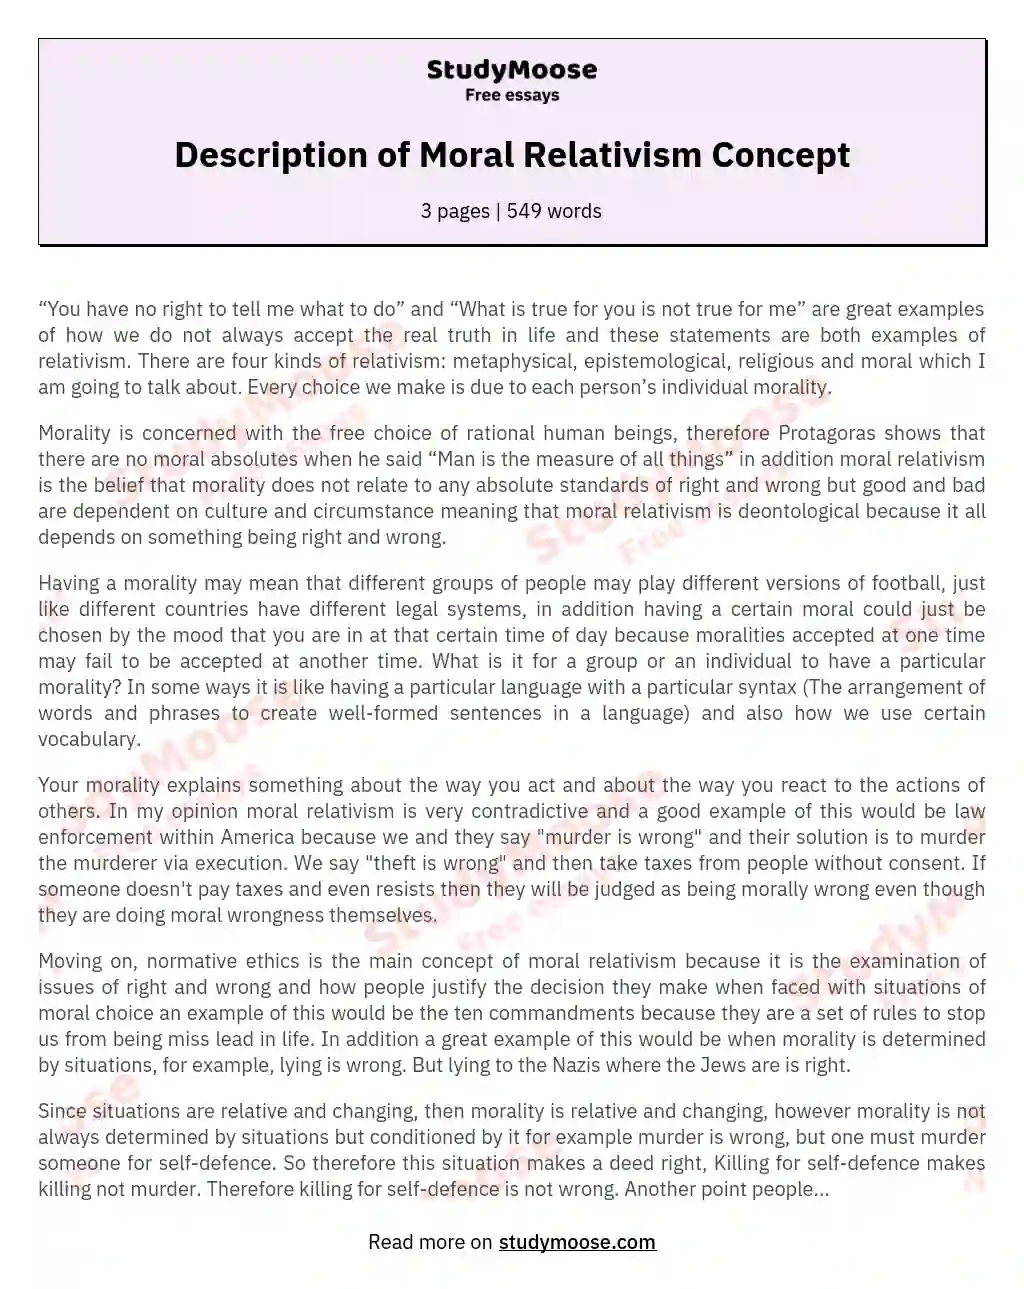 Description of Moral Relativism Concept essay